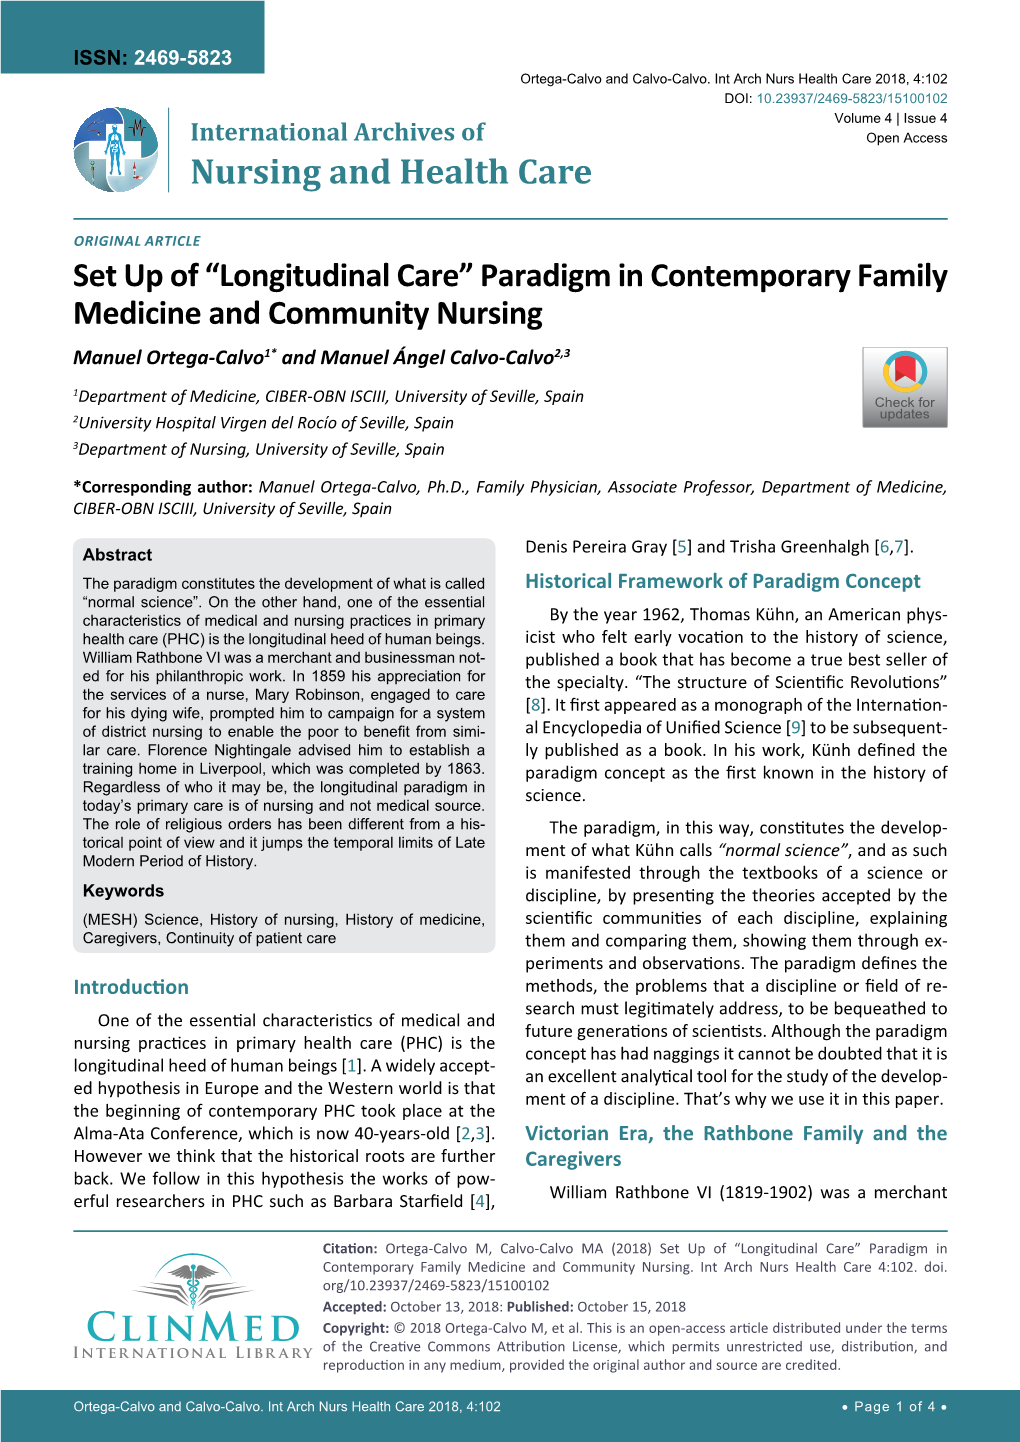 Set up of “Longitudinal Care” Paradigm in Contemporary Family Medicine and Community Nursing Manuel Ortega-Calvo1* and Manuel Ángel Calvo-Calvo2,3